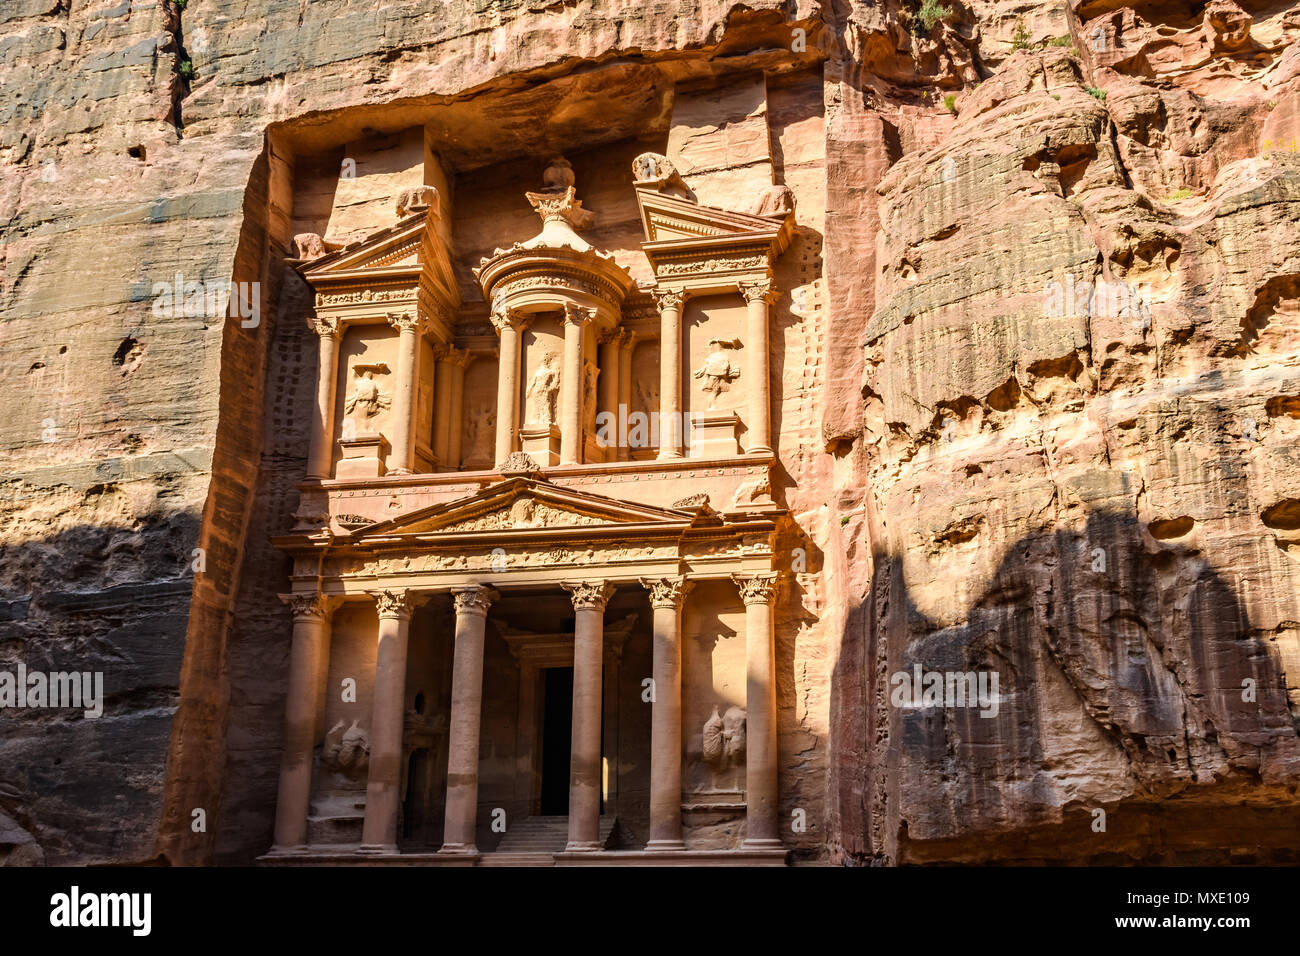 The Treasury at sunrise in the Lost City of Petra, Jordan Stock Photo